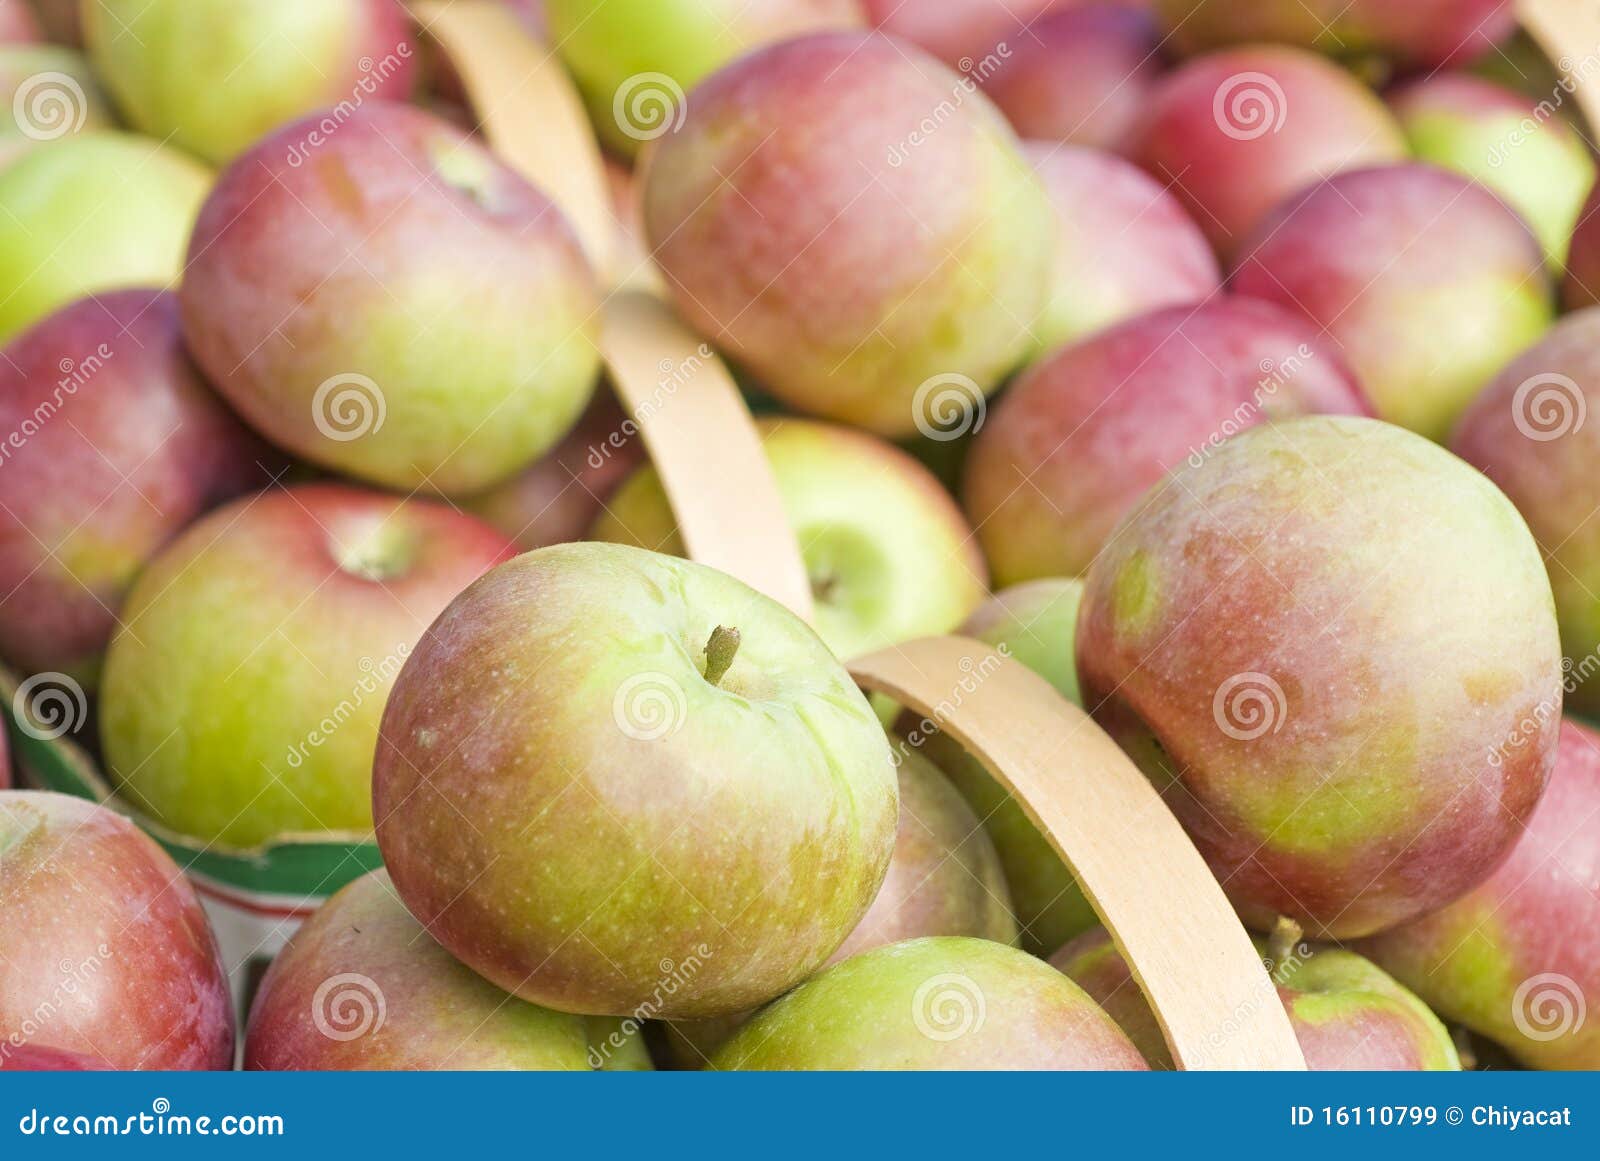 baskets of macintosh apples